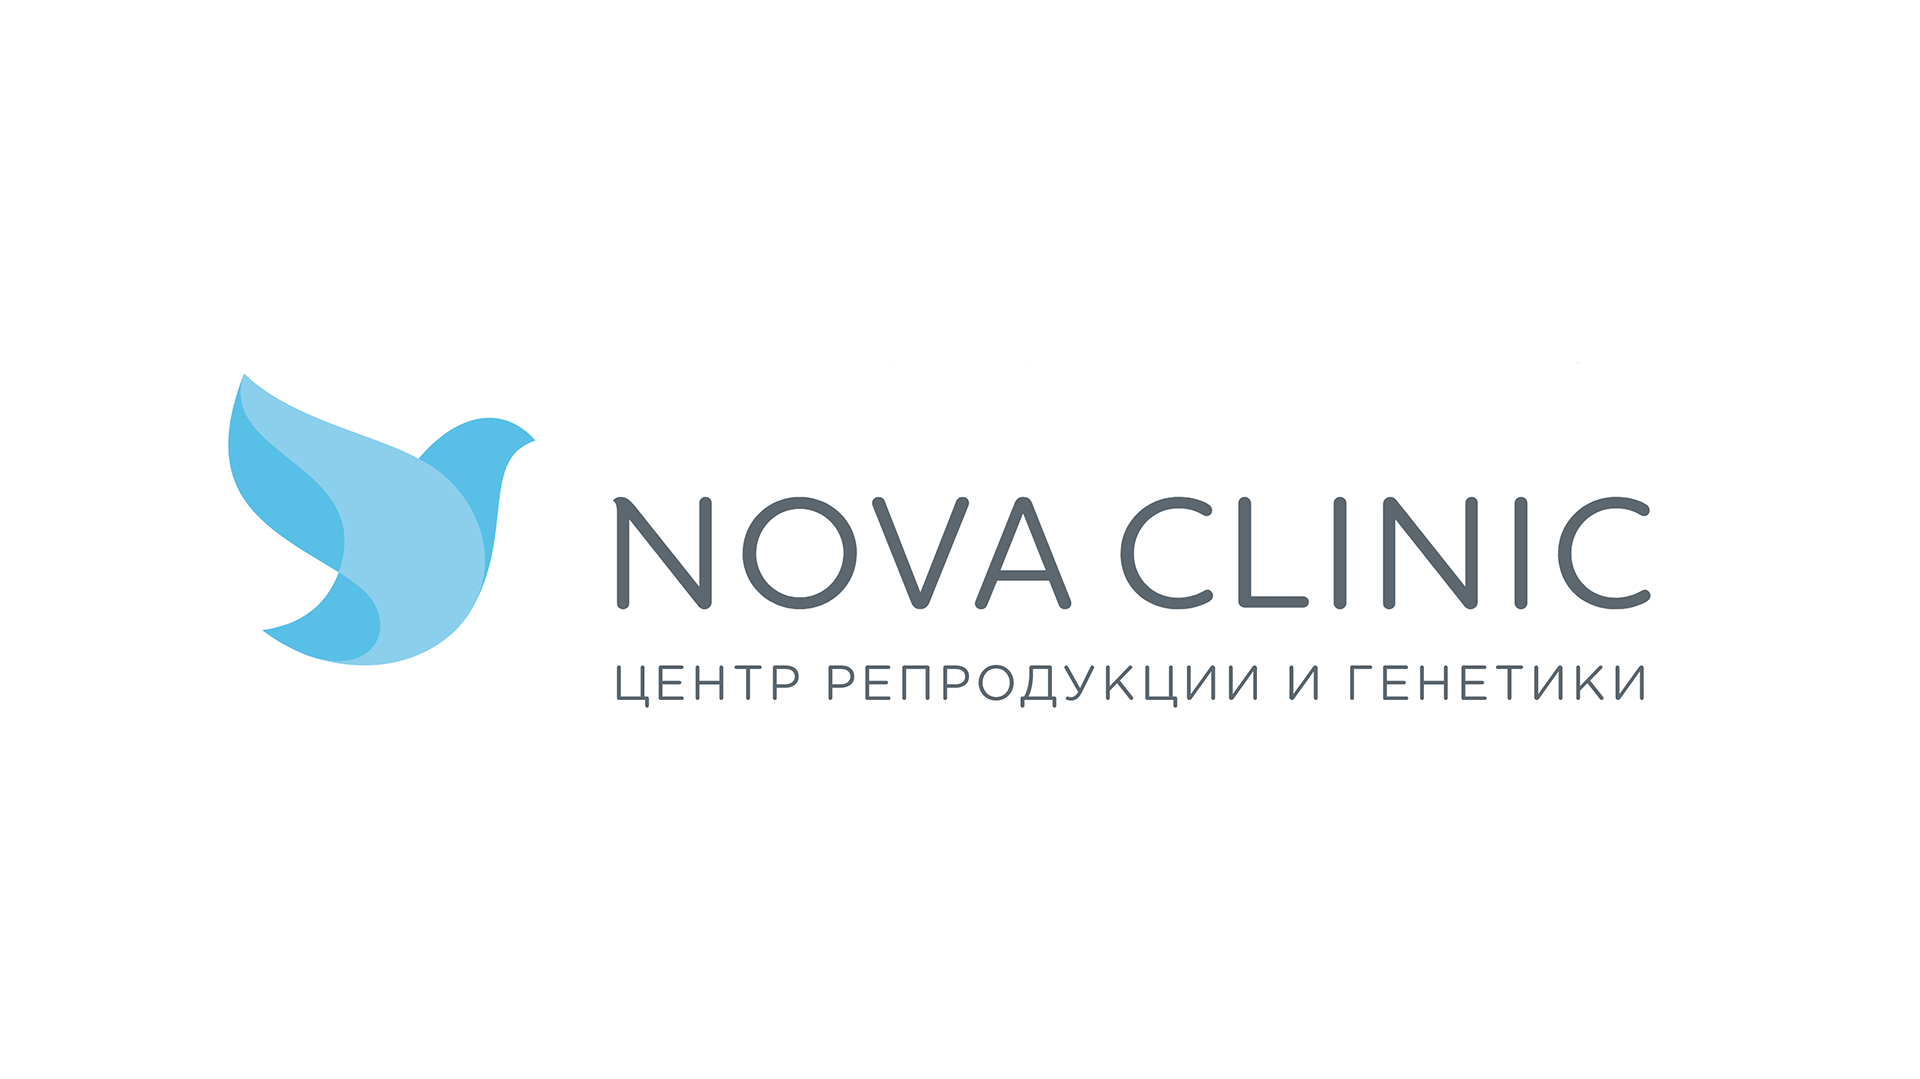 Nova clinic